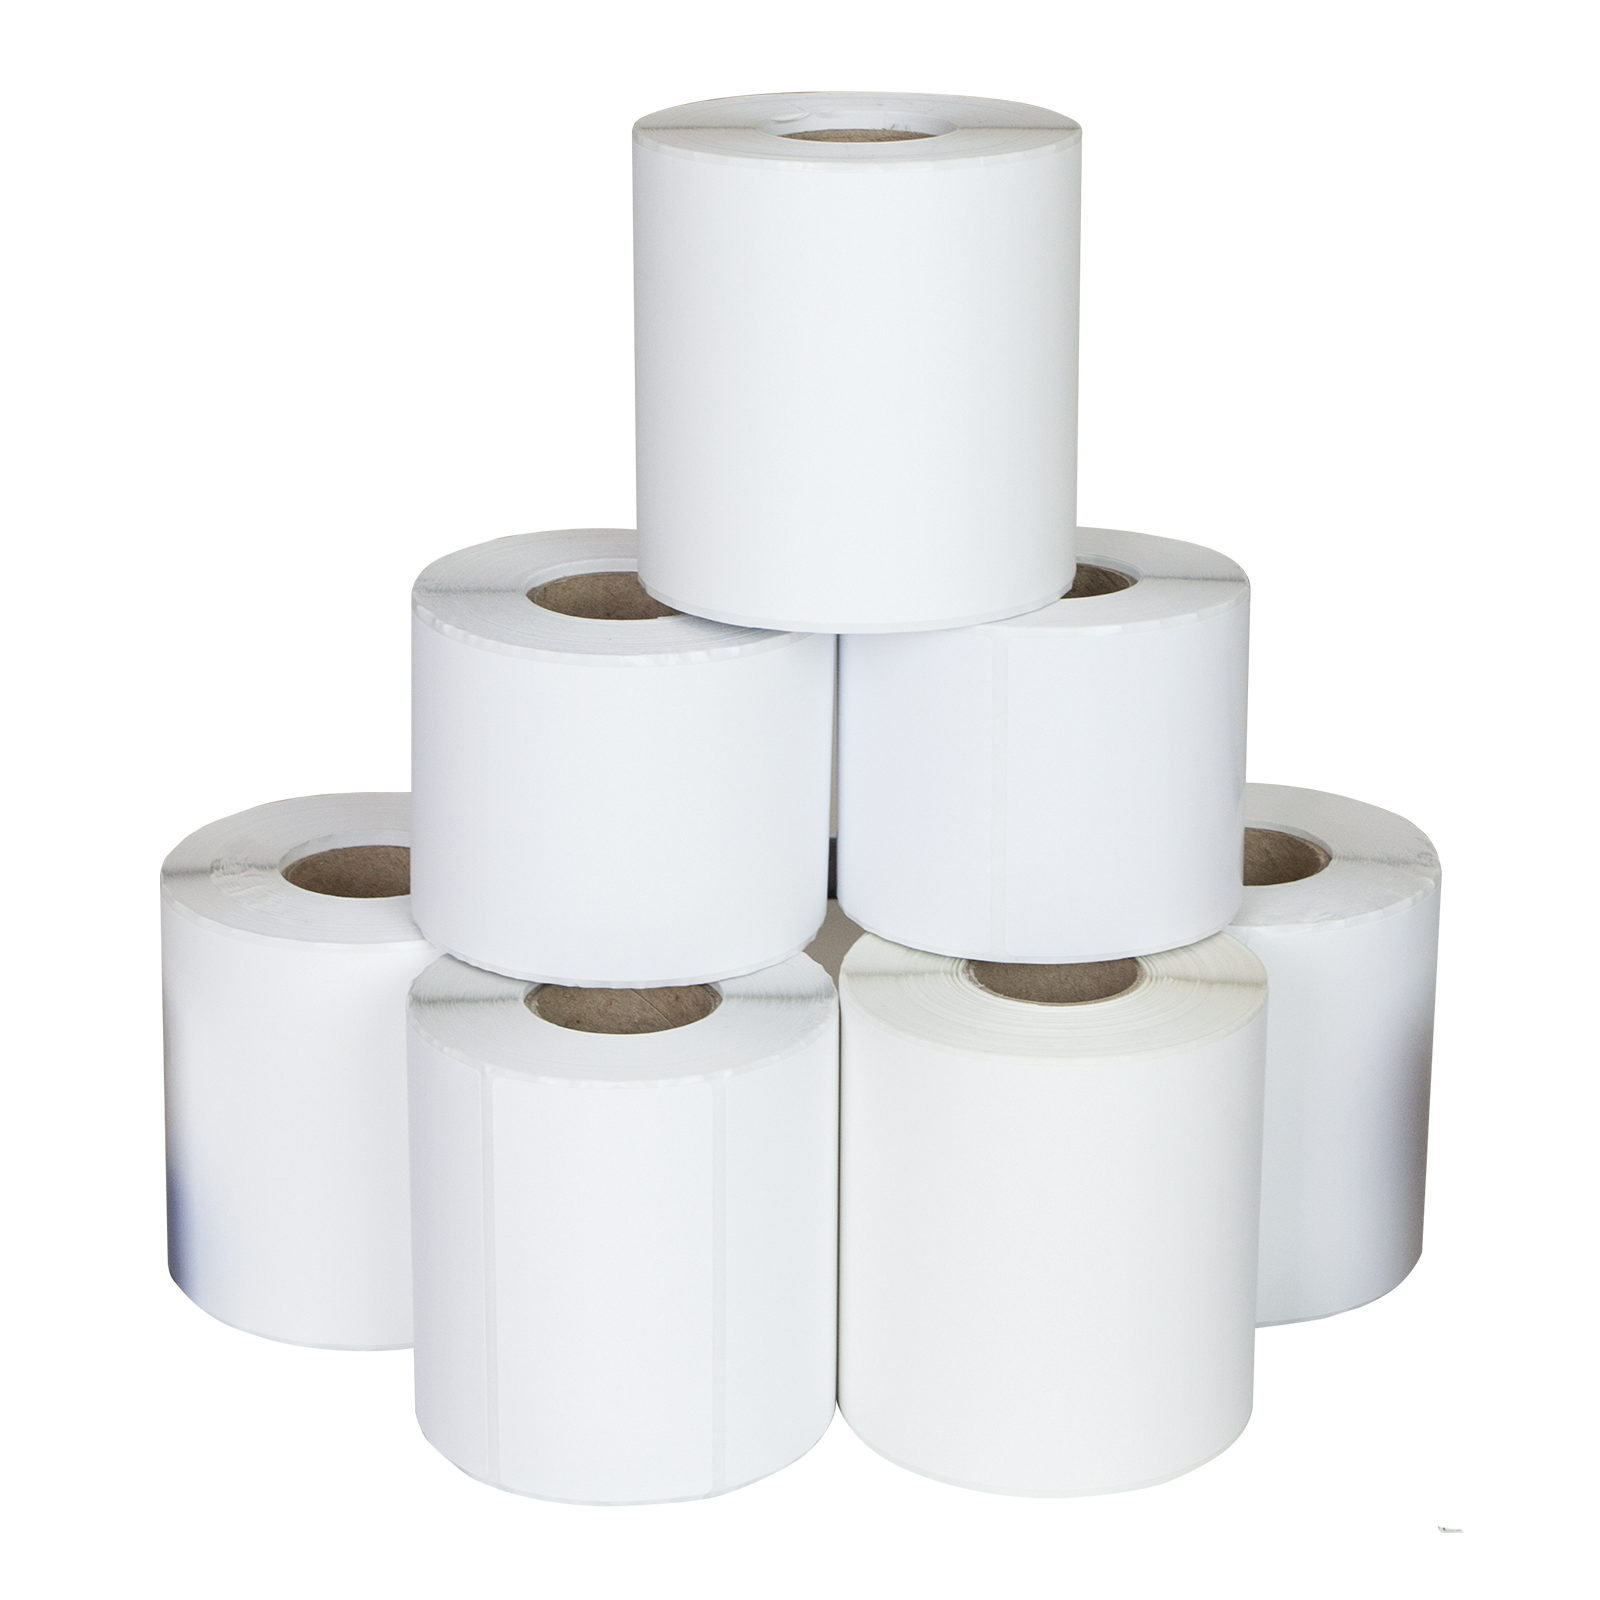 Standard thermal paper rolls | Jarltech.com